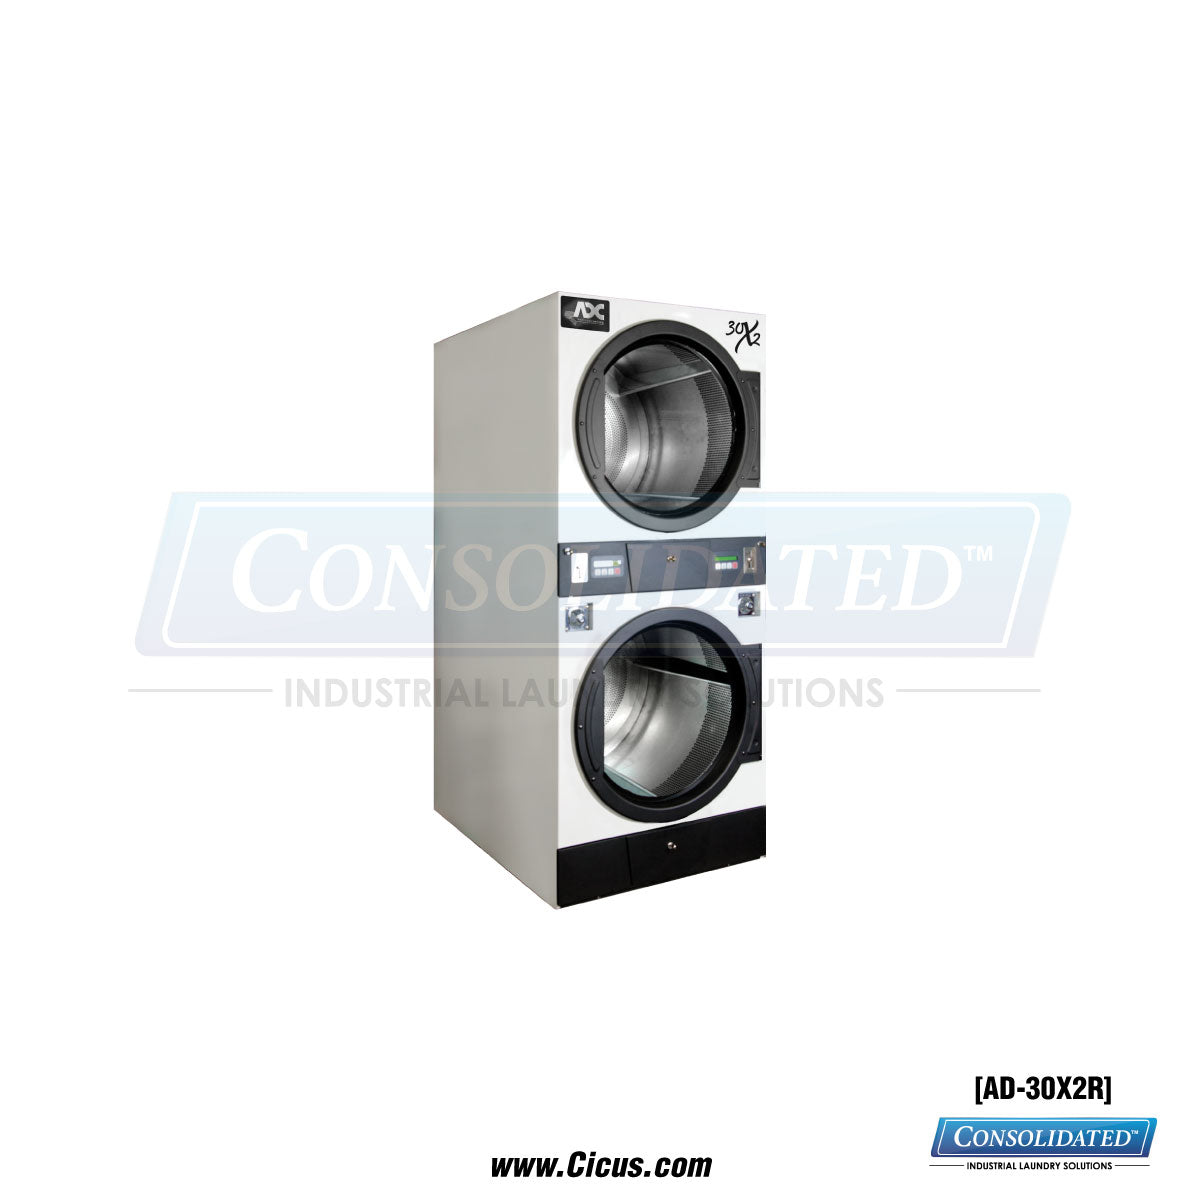 American Dryer Company 30-lb Capacity Coin Dryer [AD-30X2R]